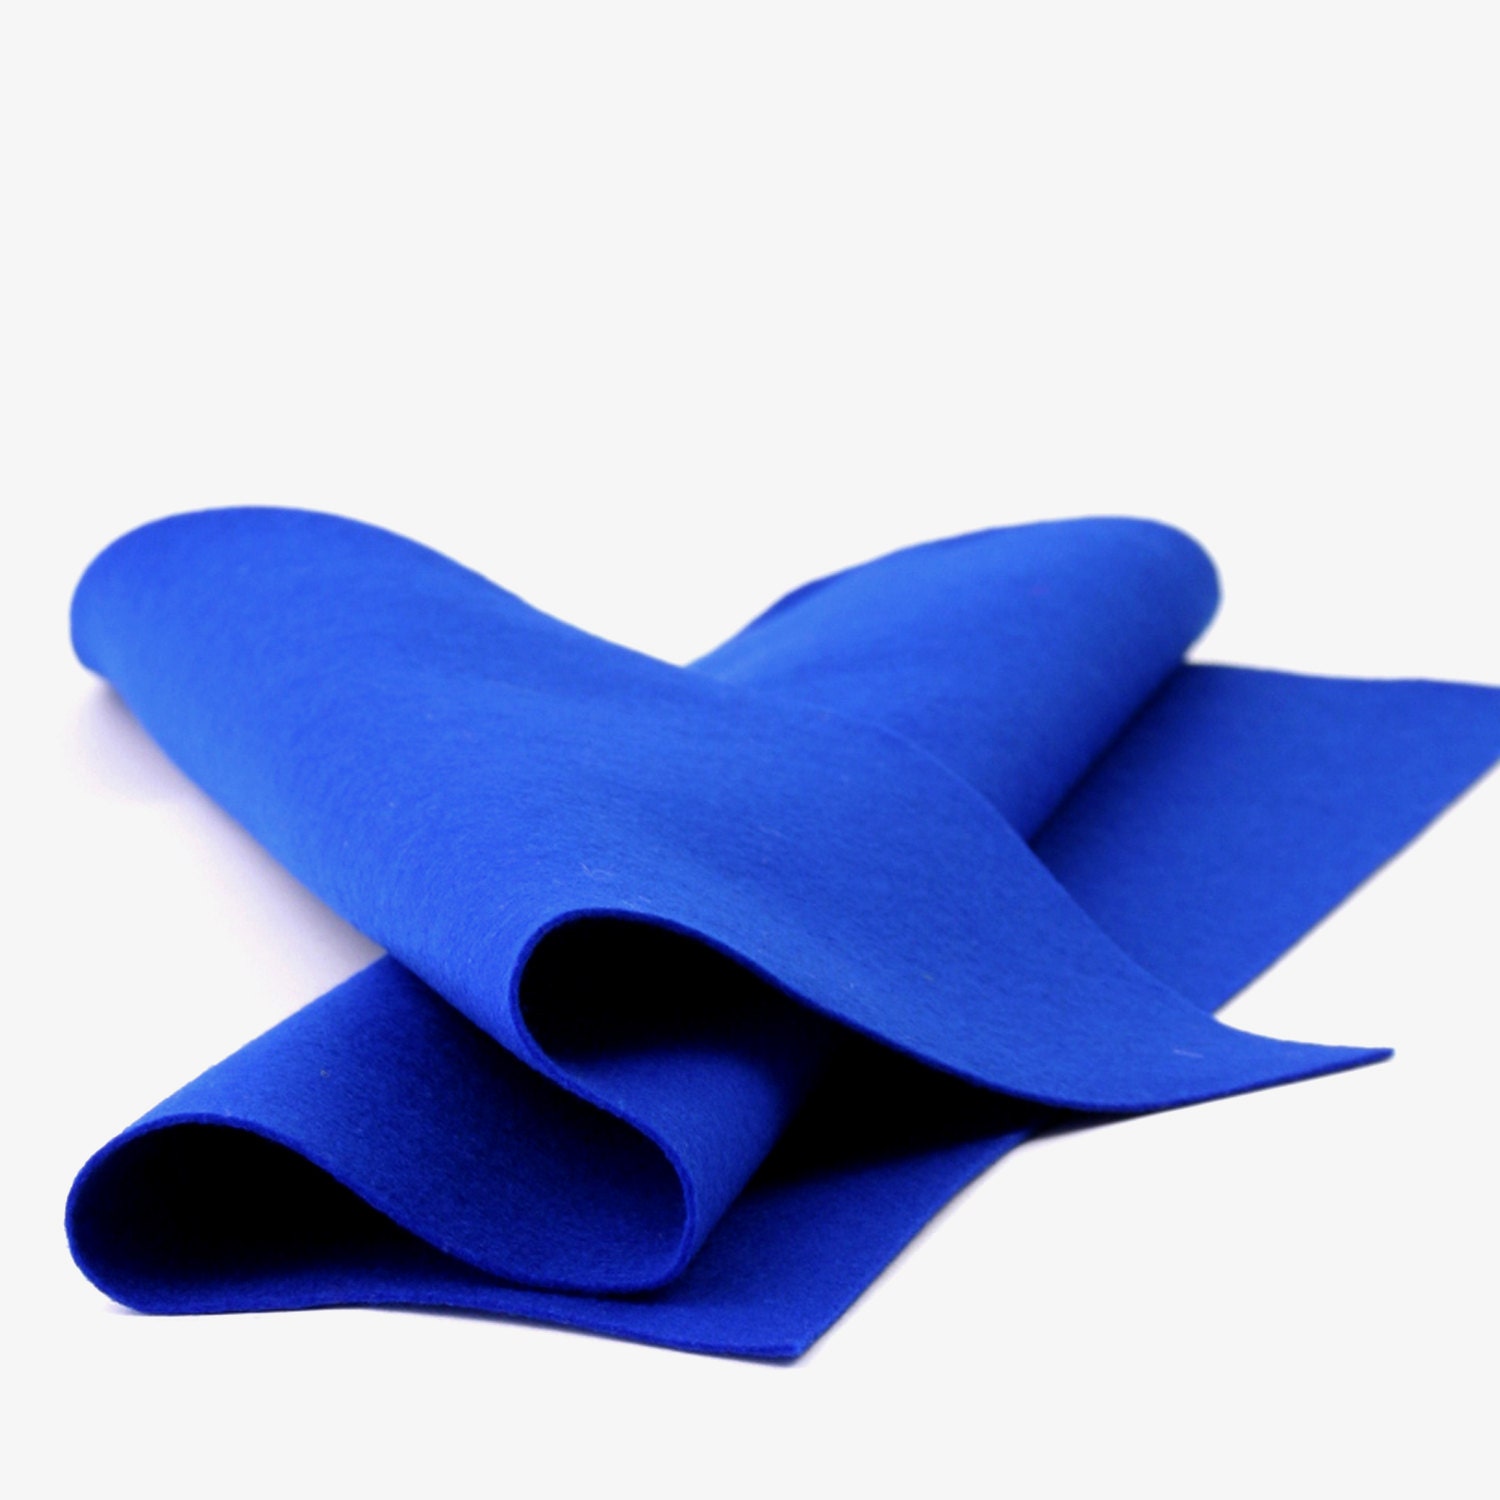 National Nonwovens Spellbound Sapphire - Heather Blue - Wool Felt Oversized Sheet - 35% Wool Blend - 1 12x18 inch Sheet